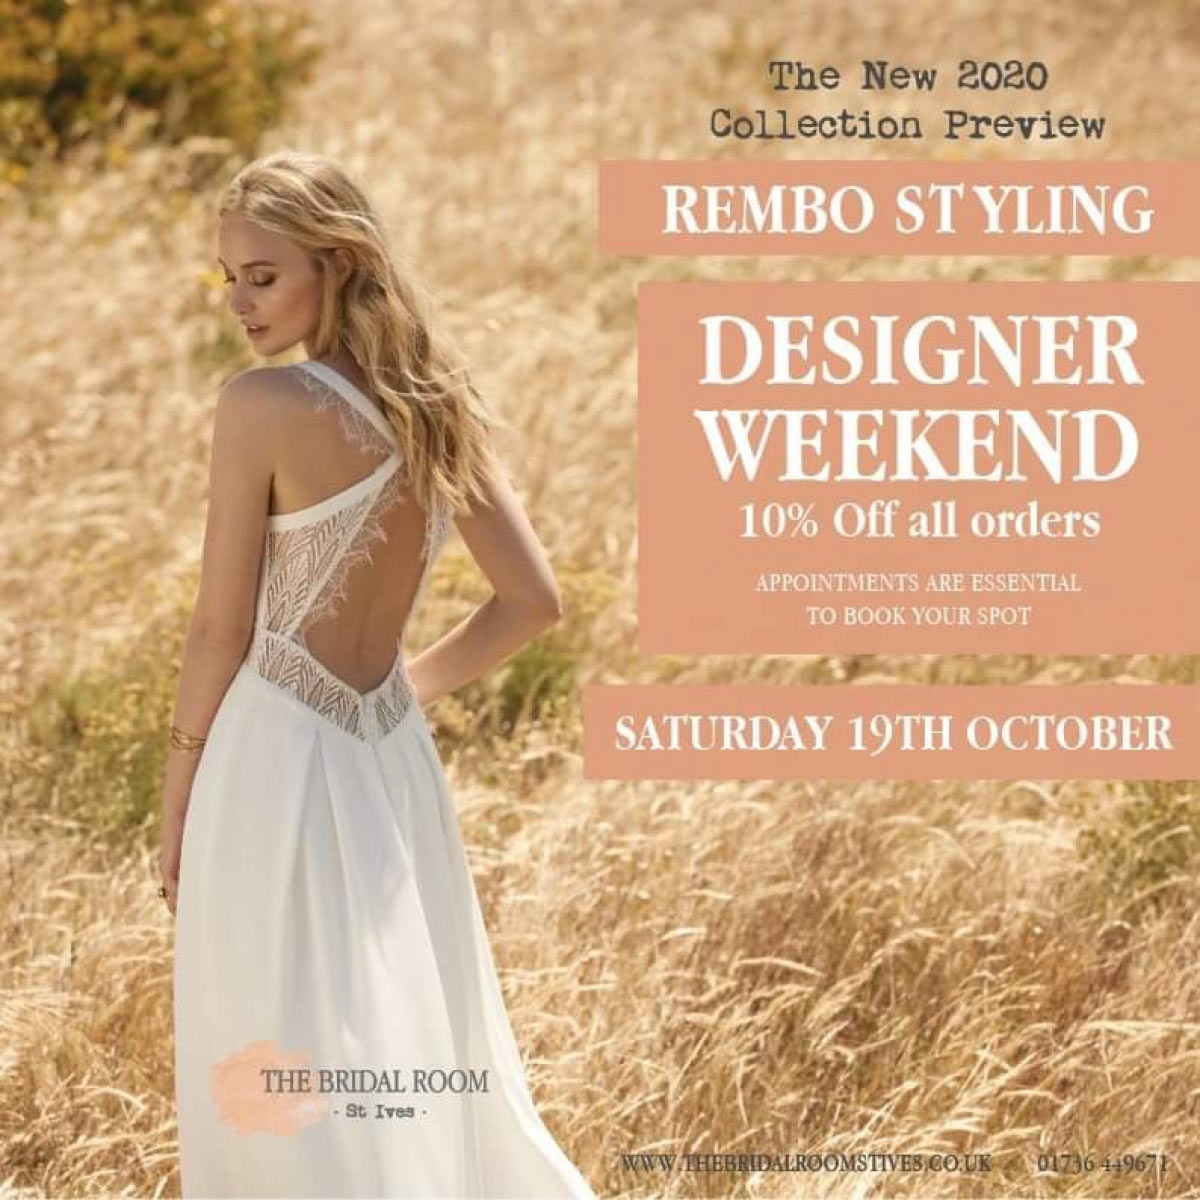 Rembo Styling designer weekend at Bridal Room St Ives